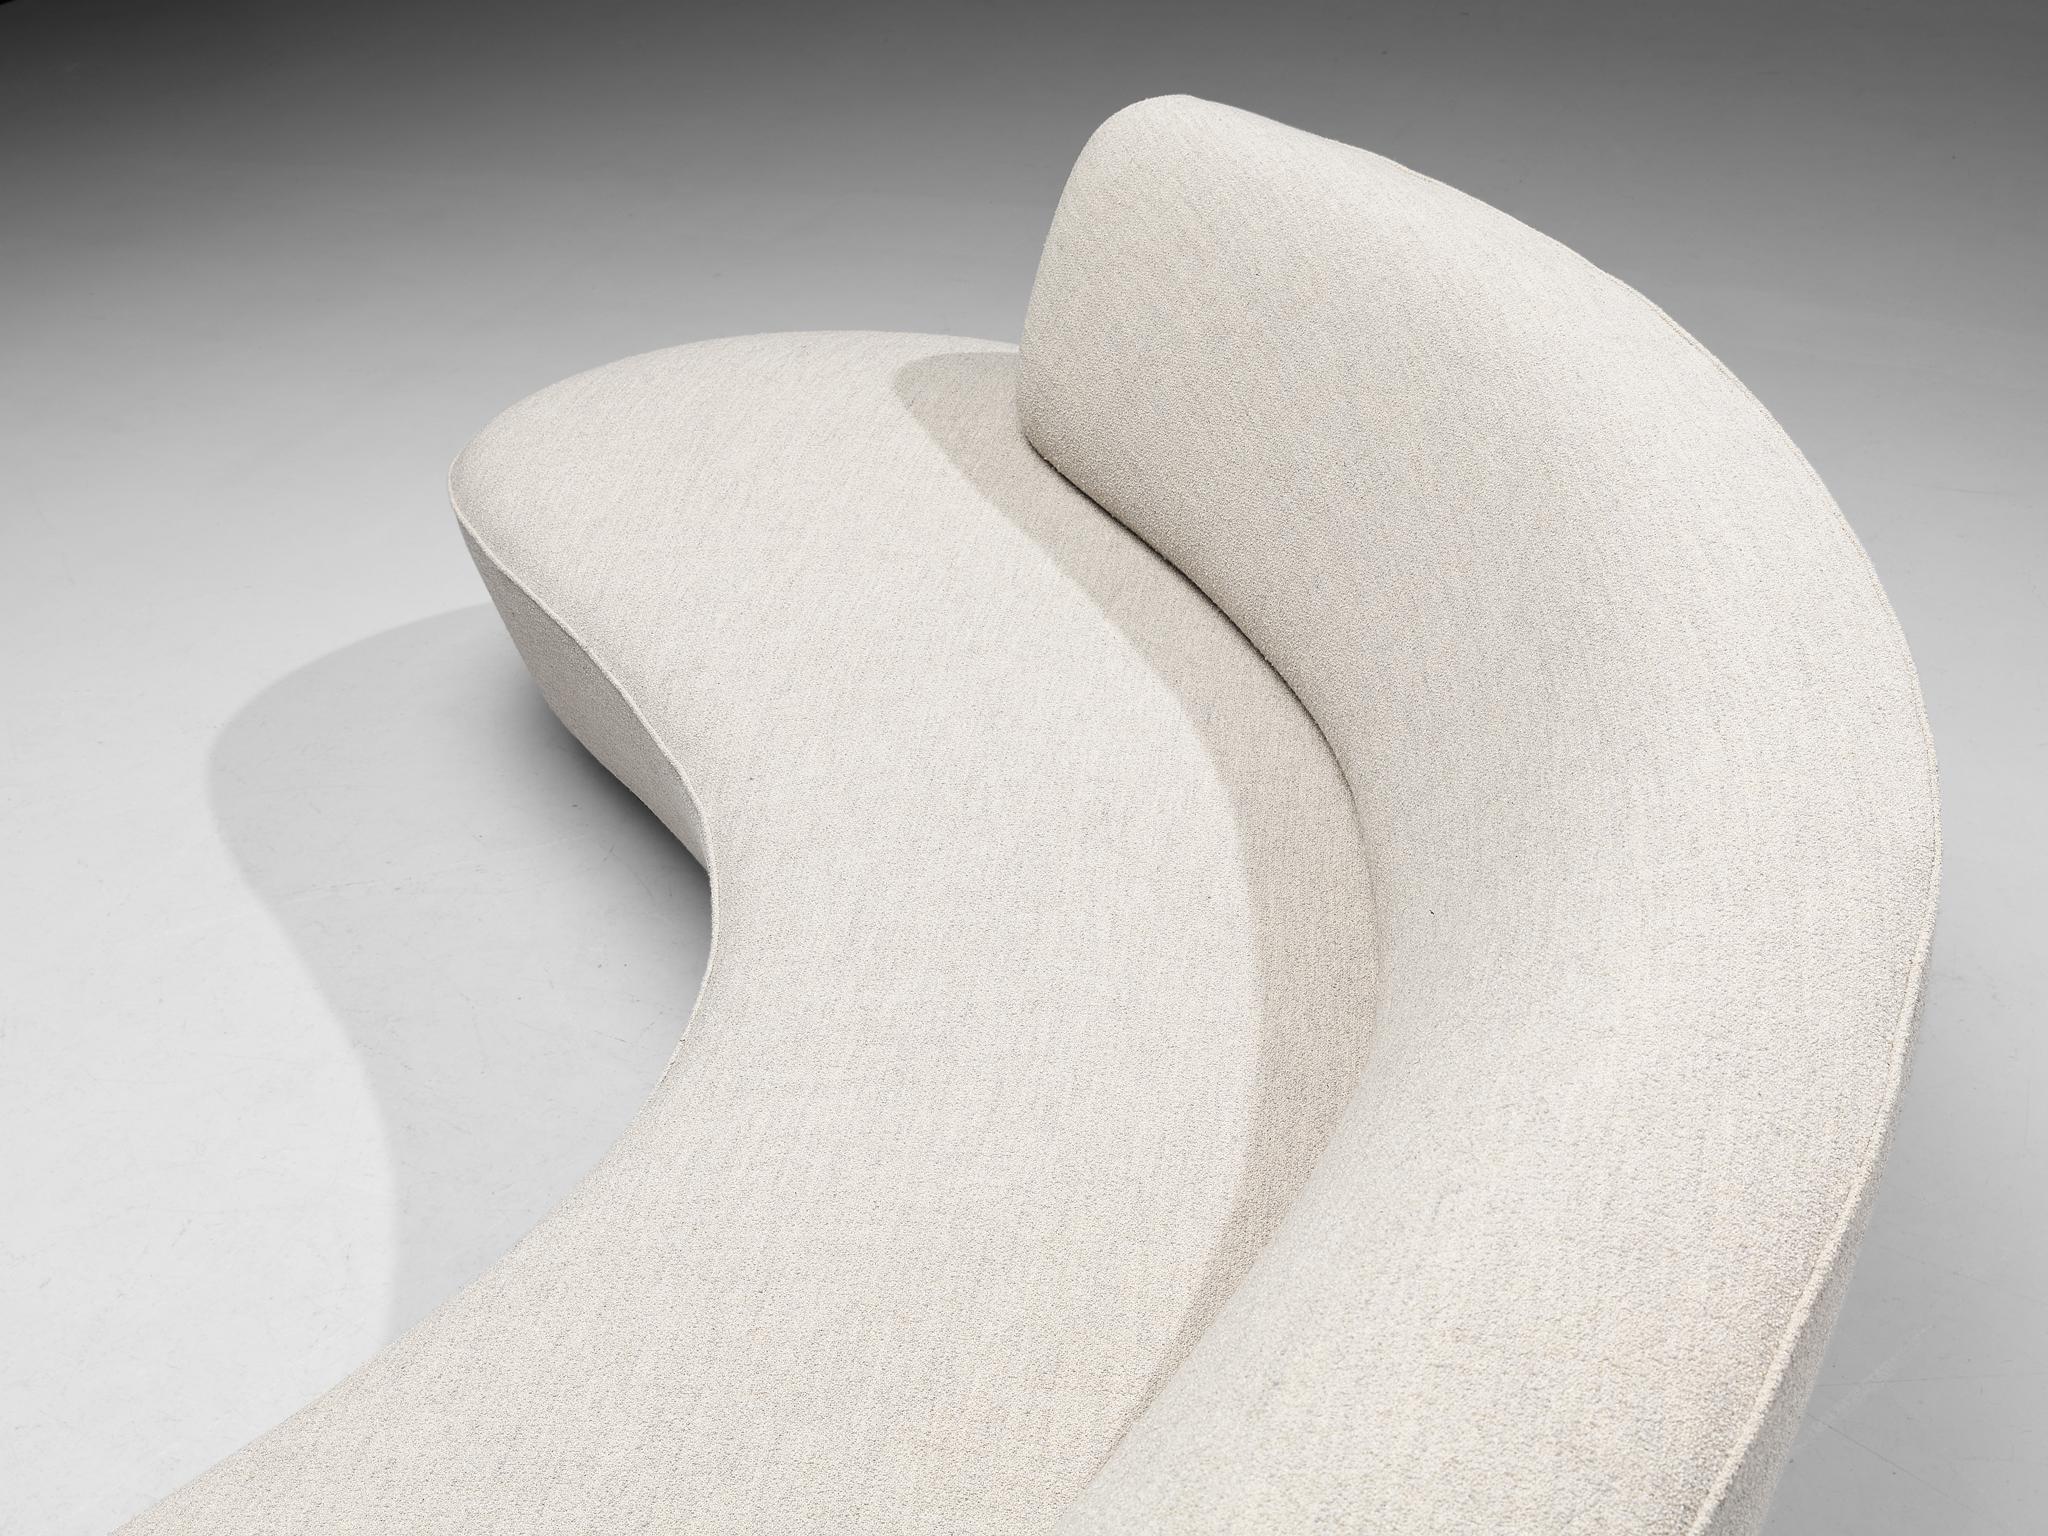 Iconic Vladimir Kagan ‘Serpentine’ Sofa in White Upholstery 3